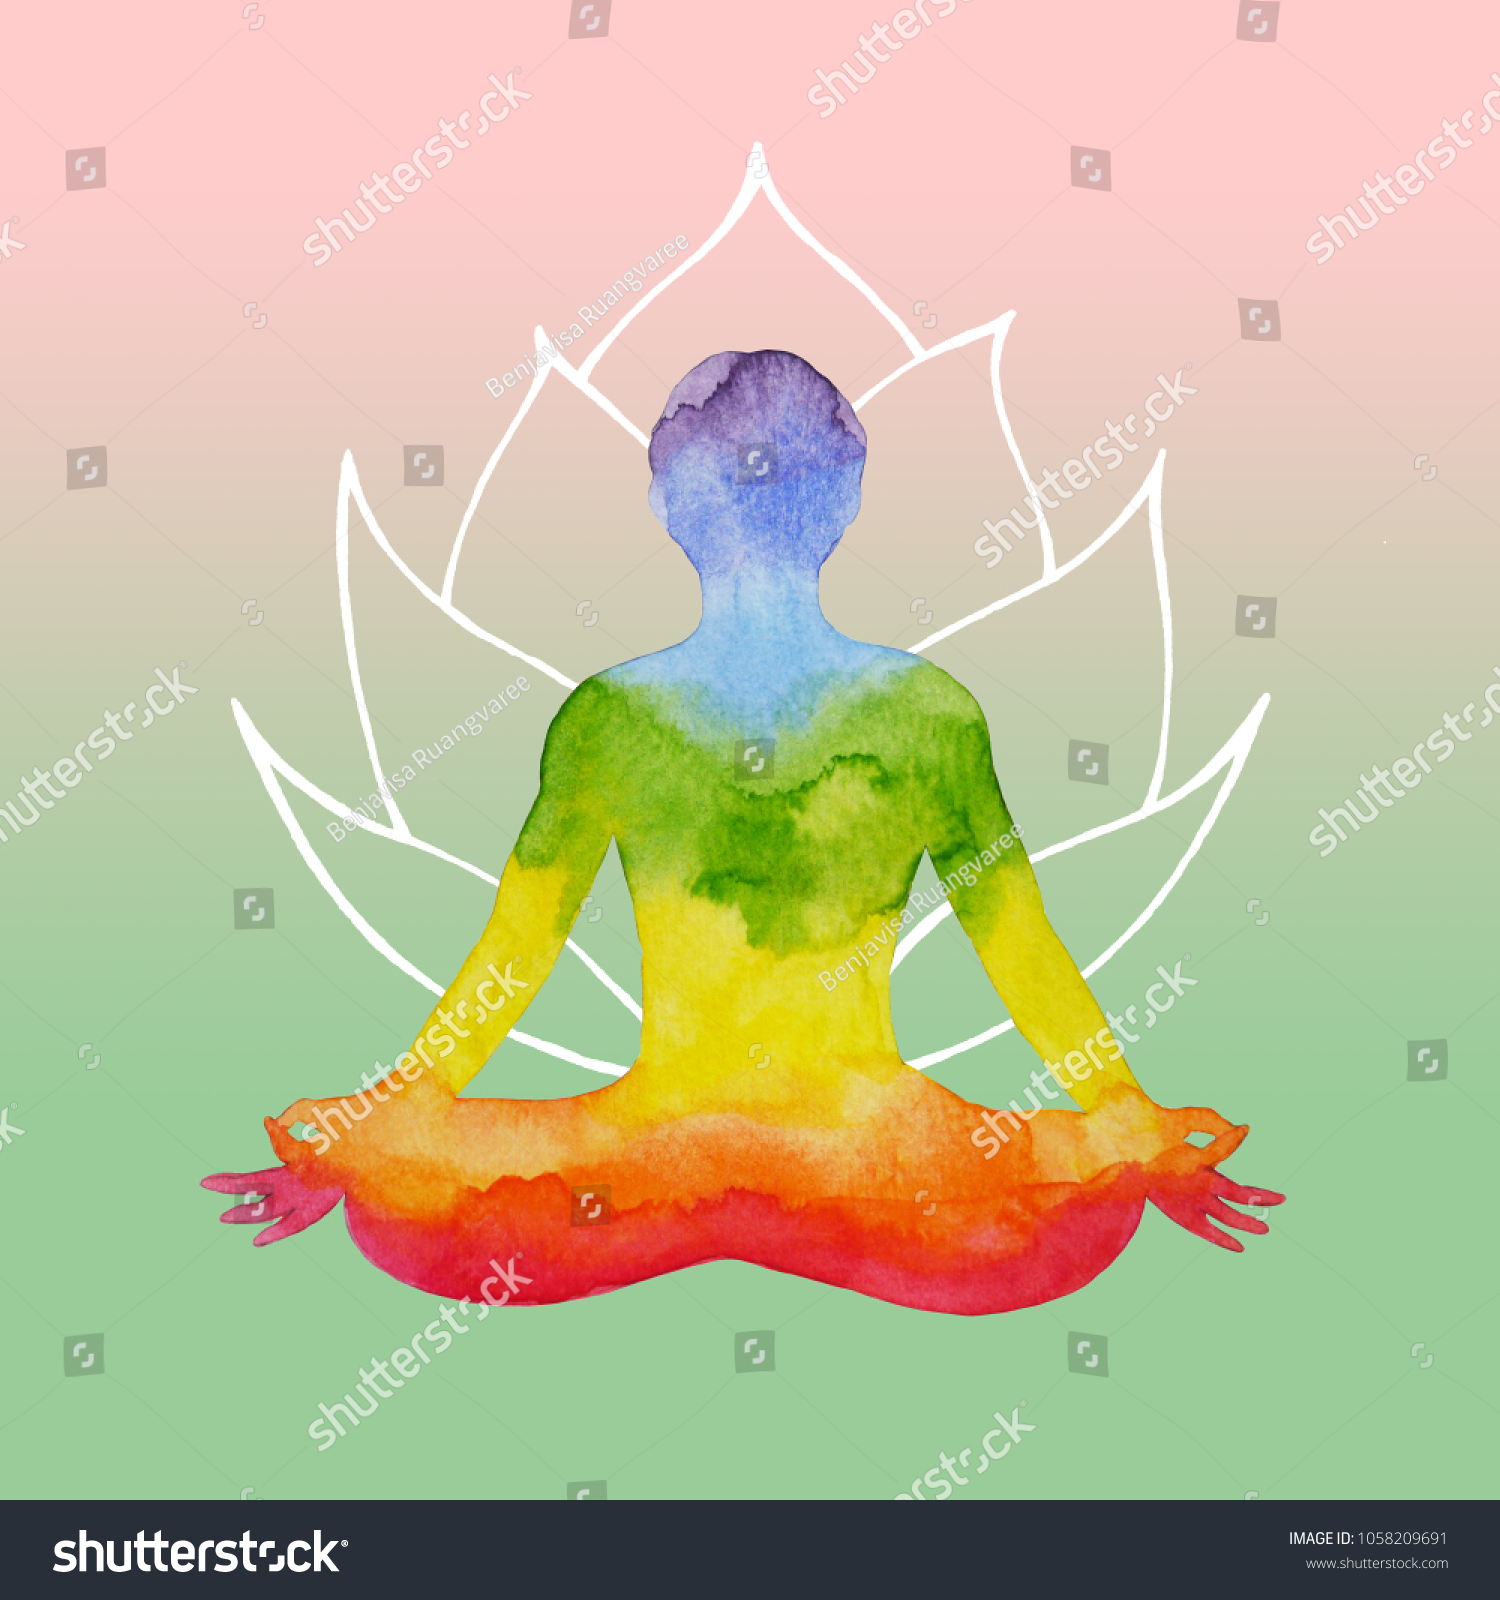 7 Chakra Human Lotus Pose Yoga Stock Illustration 1058209691 Shutterstock 